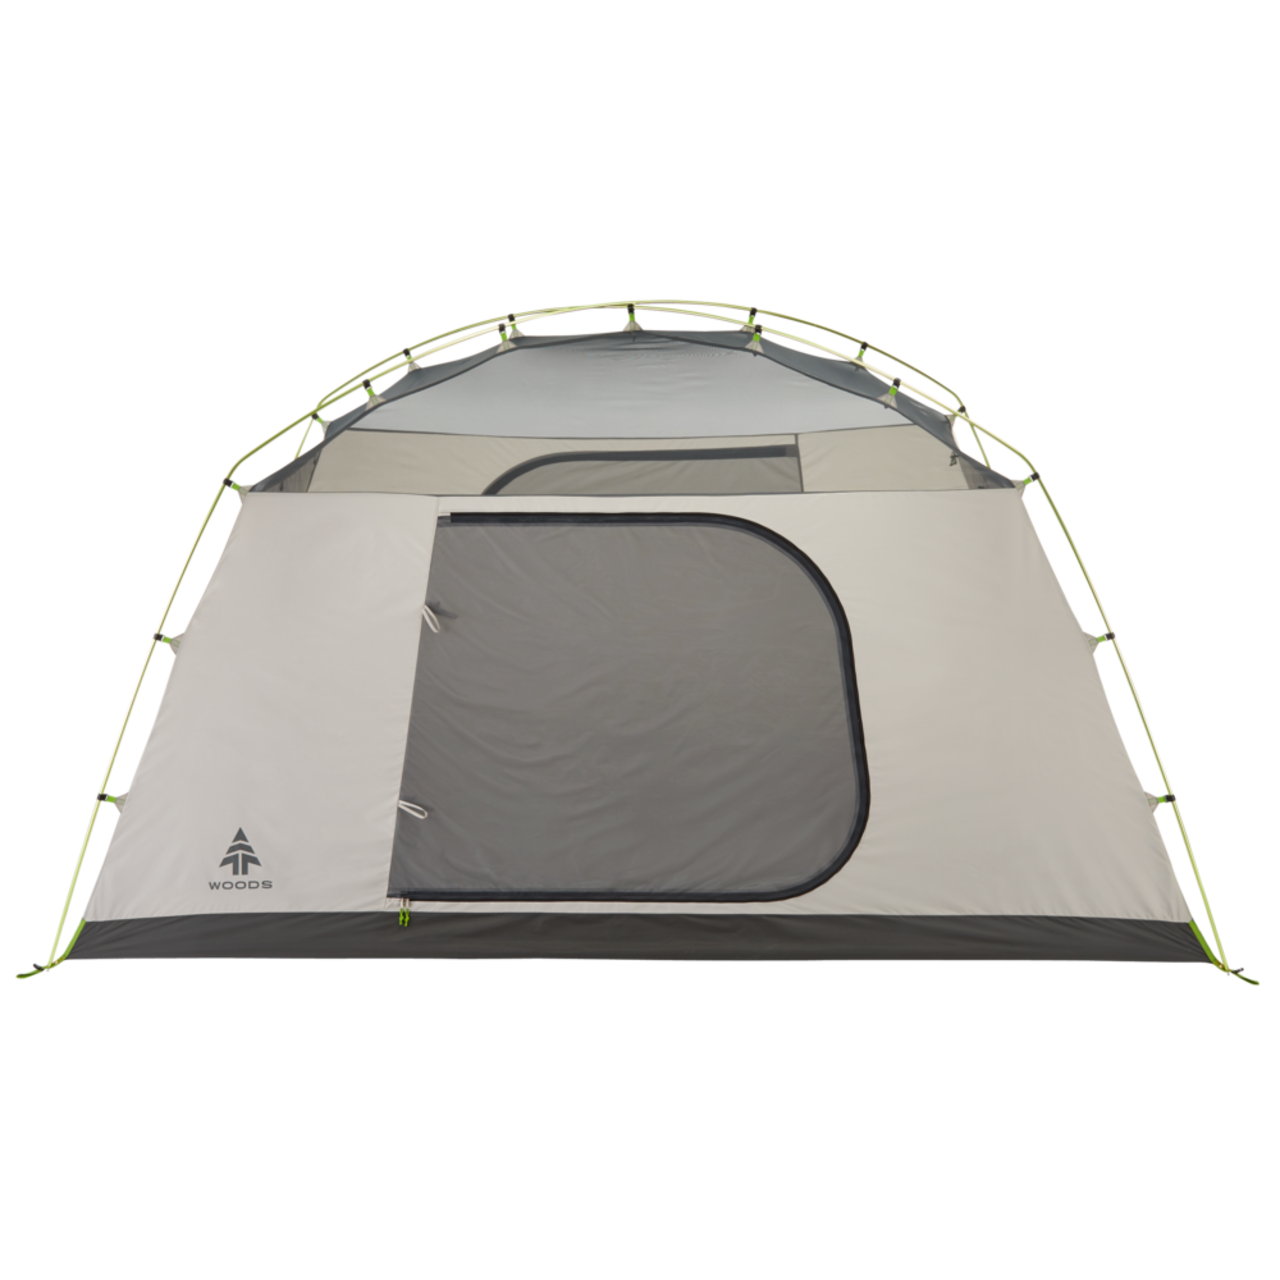 Woods Cascade 3-Season, 2-Person Camping Dome Tent w/ 2 Doors, Vestibules,  Rain Fly & Carry Bag